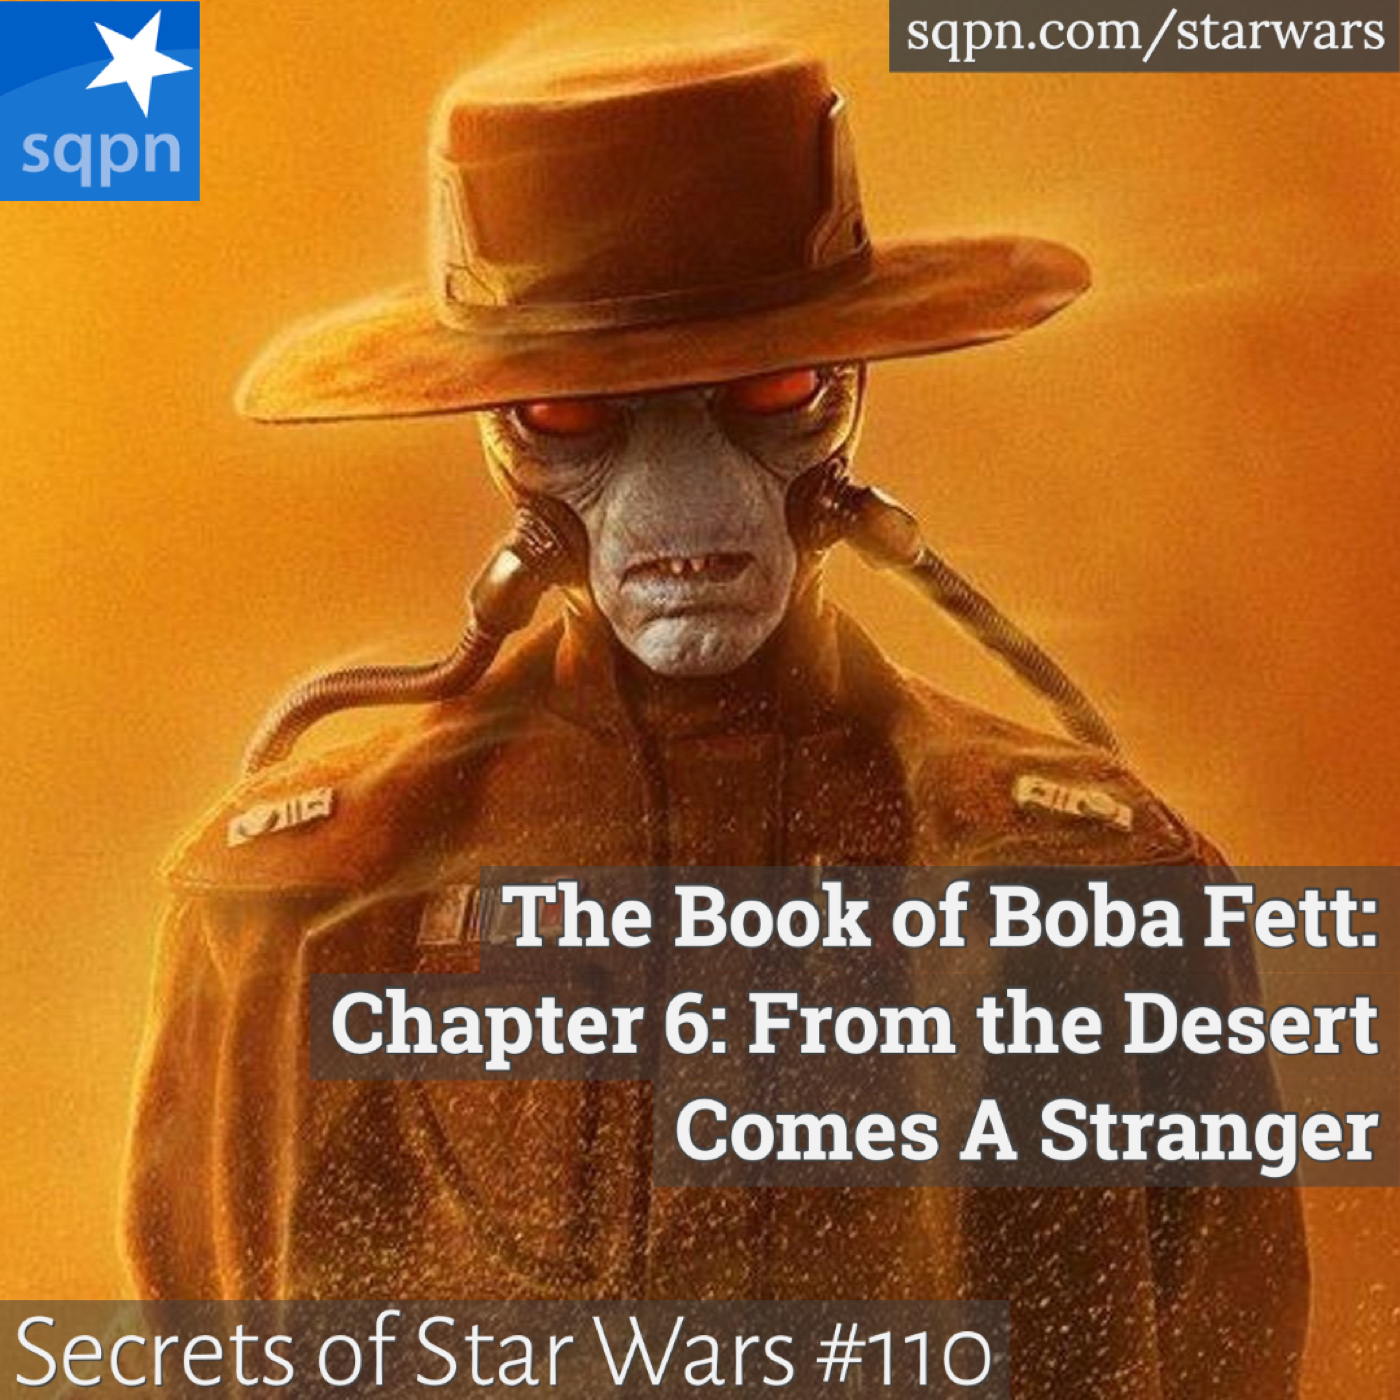 The Book of Boba Fett, Chapter 6: From the Desert Comes A Stranger